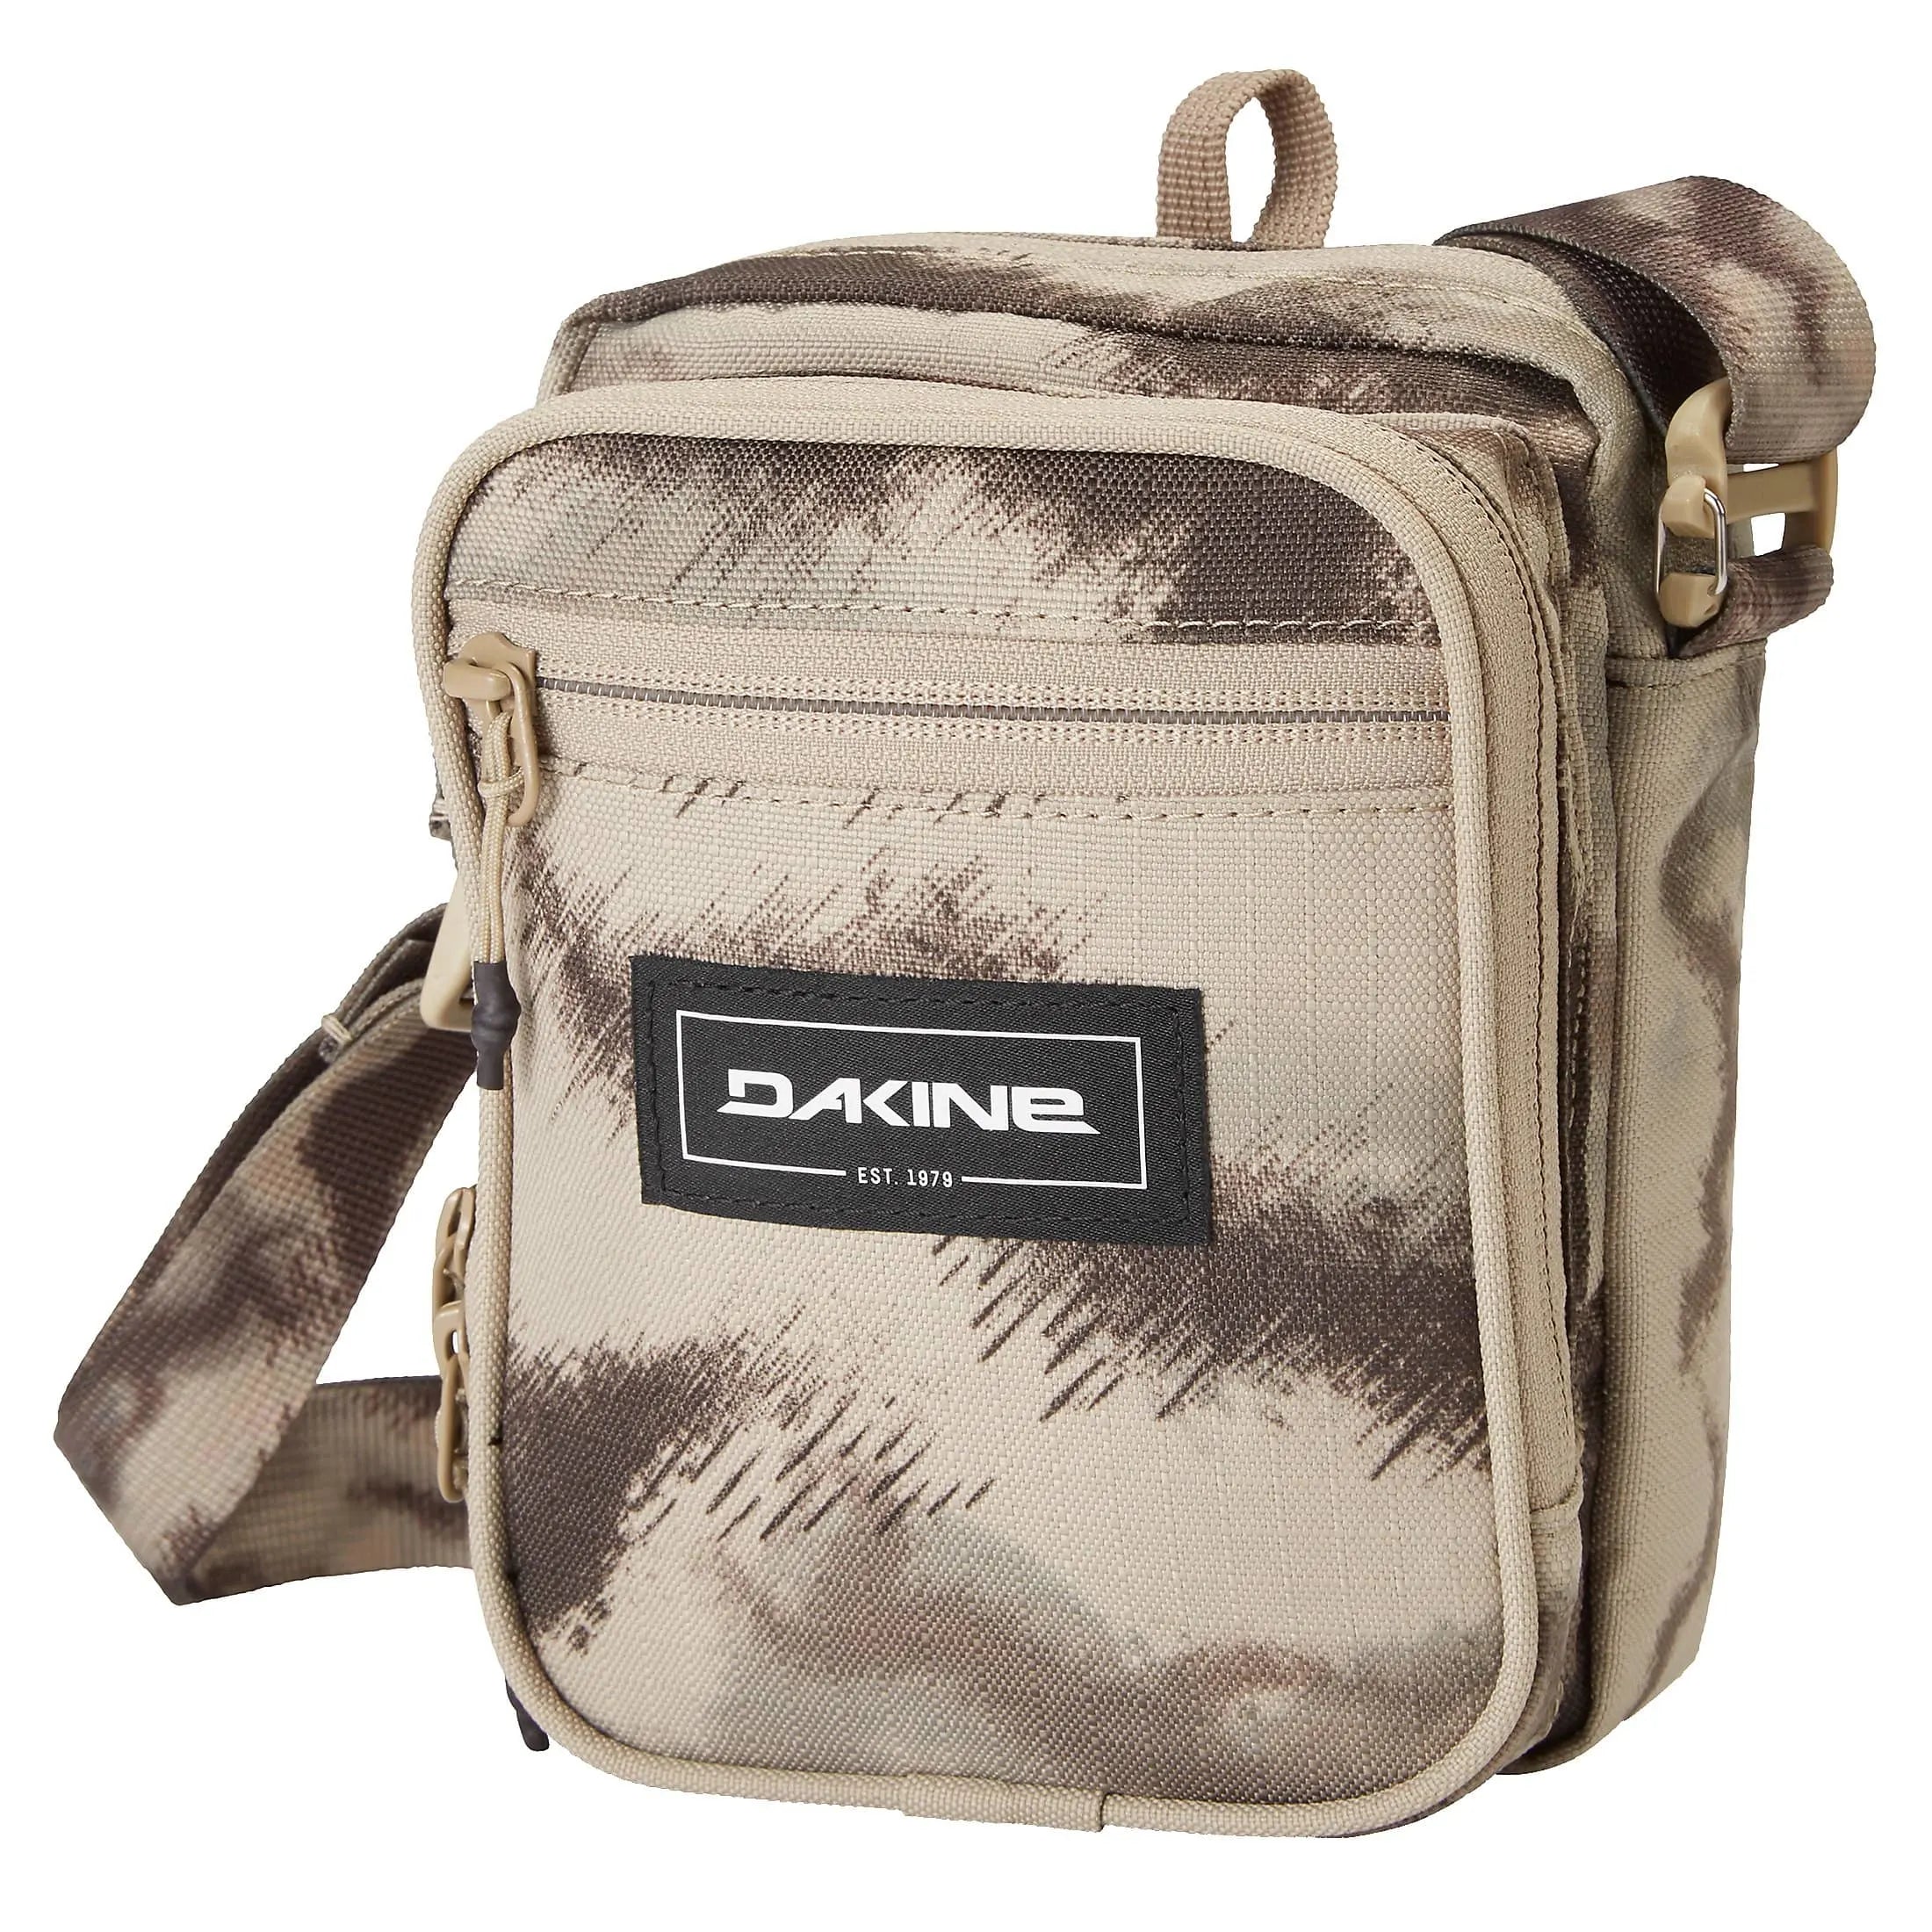 Dakine Packs & Bags Field Bag Handtasche 18 cm - ashcroft camo